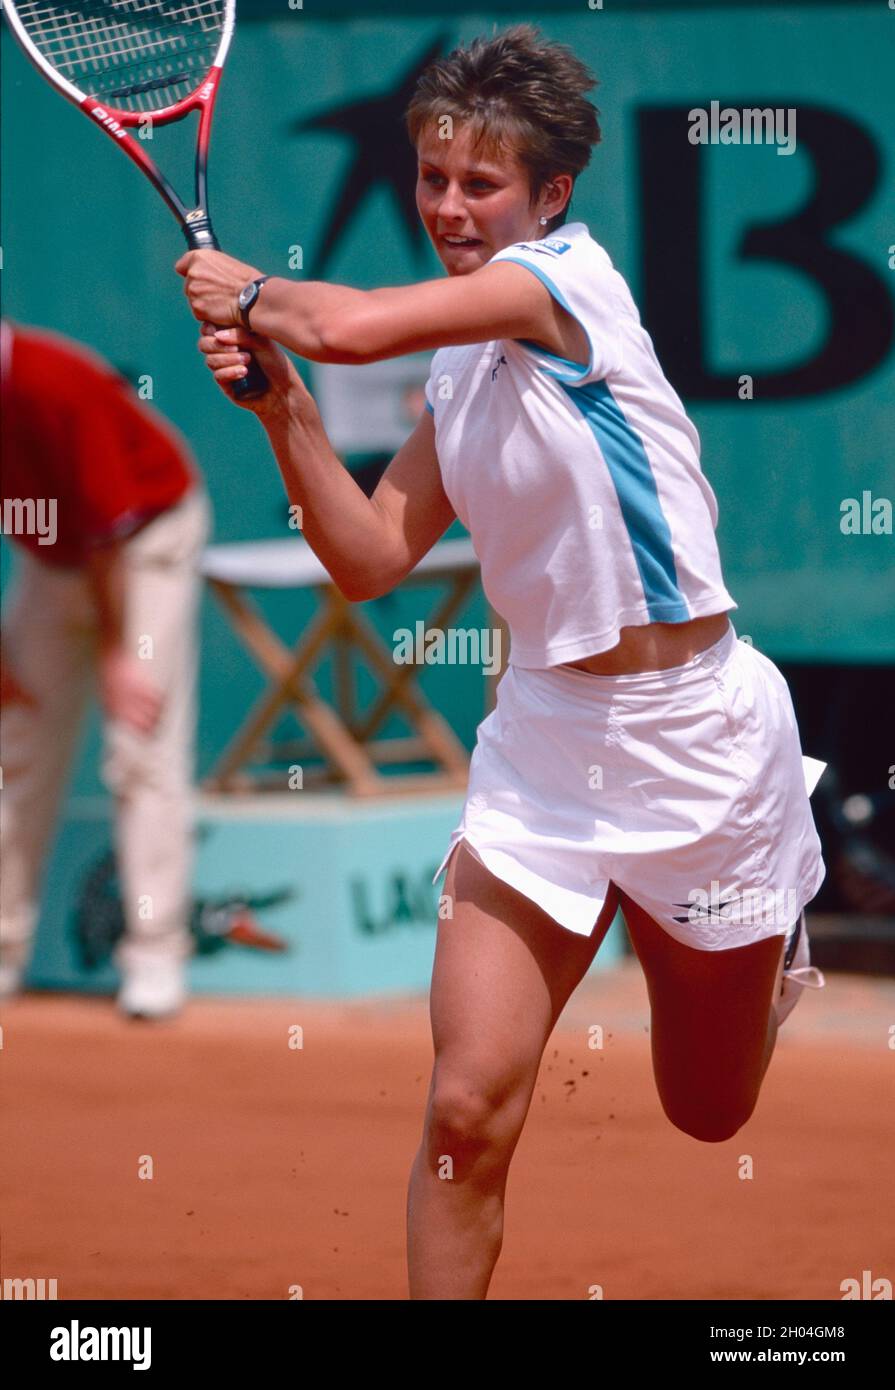 Russian tennis player Lina Krasnoroutskaya, French Open 2001 Stock Photo